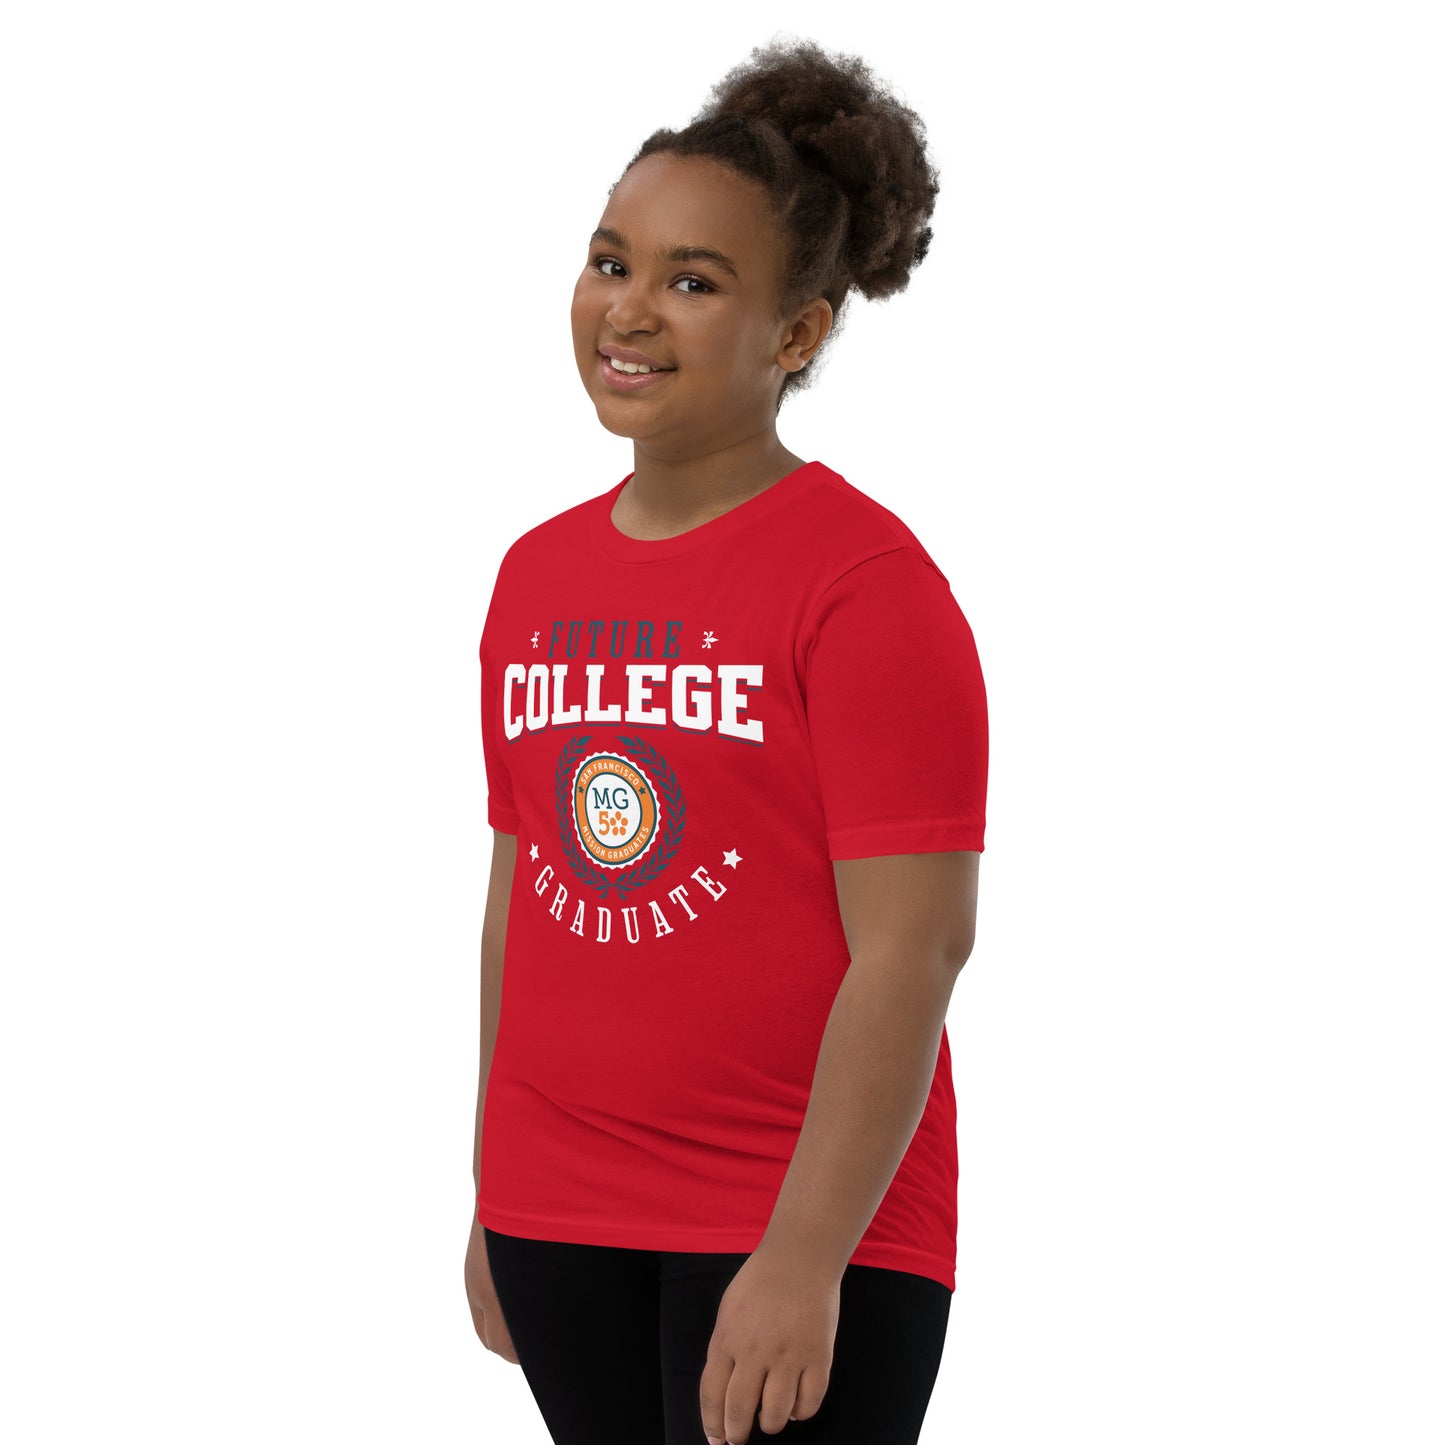 Future College Graduate MG Collegiate Youth Short Sleeve T-Shirt